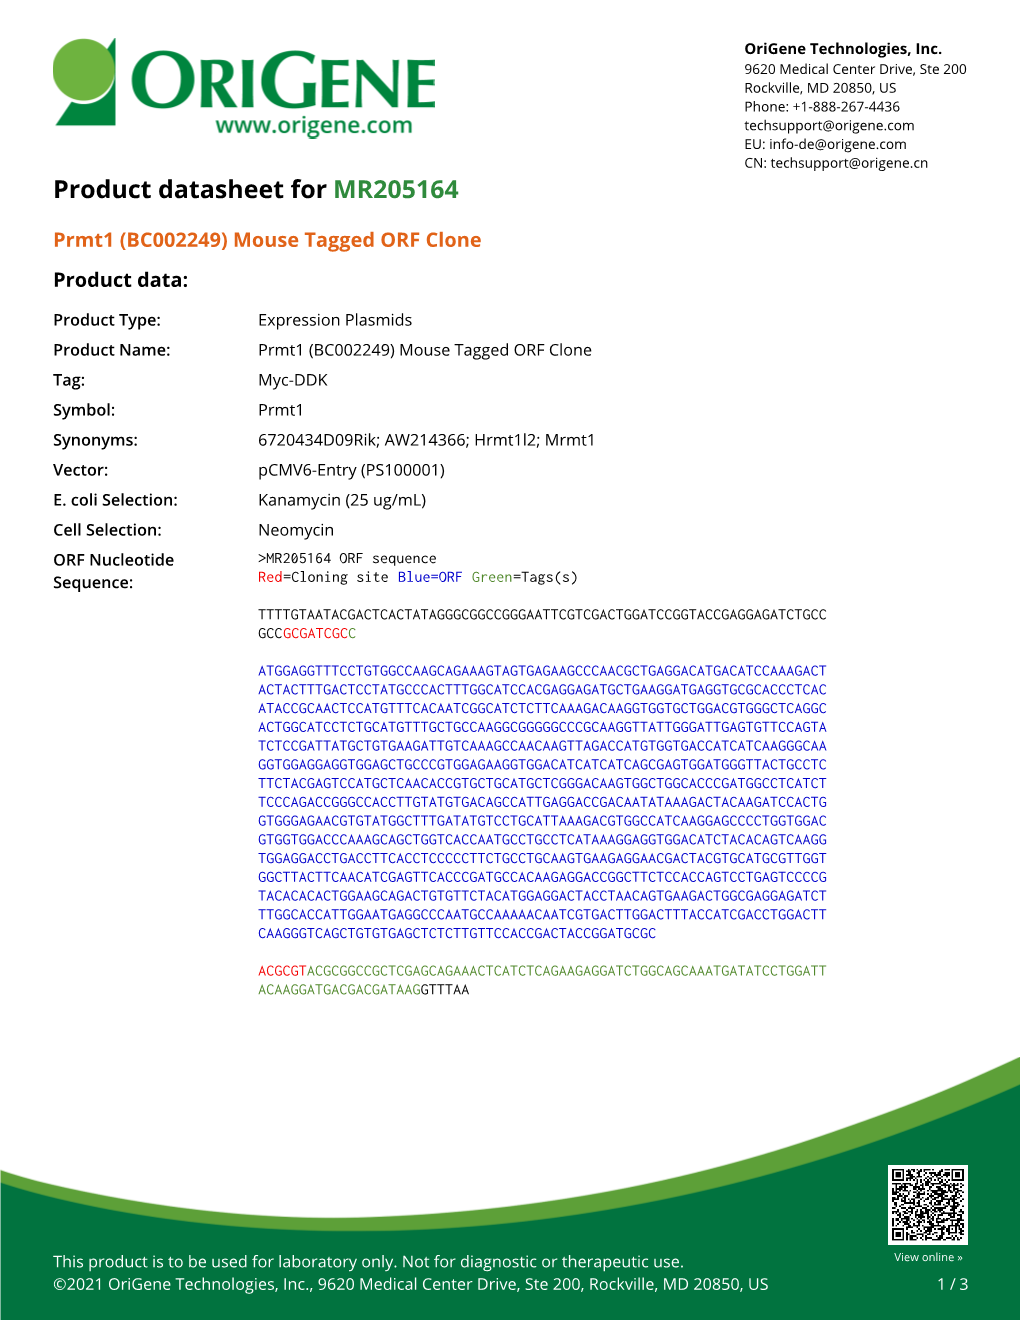 Prmt1 (BC002249) Mouse Tagged ORF Clone – MR205164 | Origene